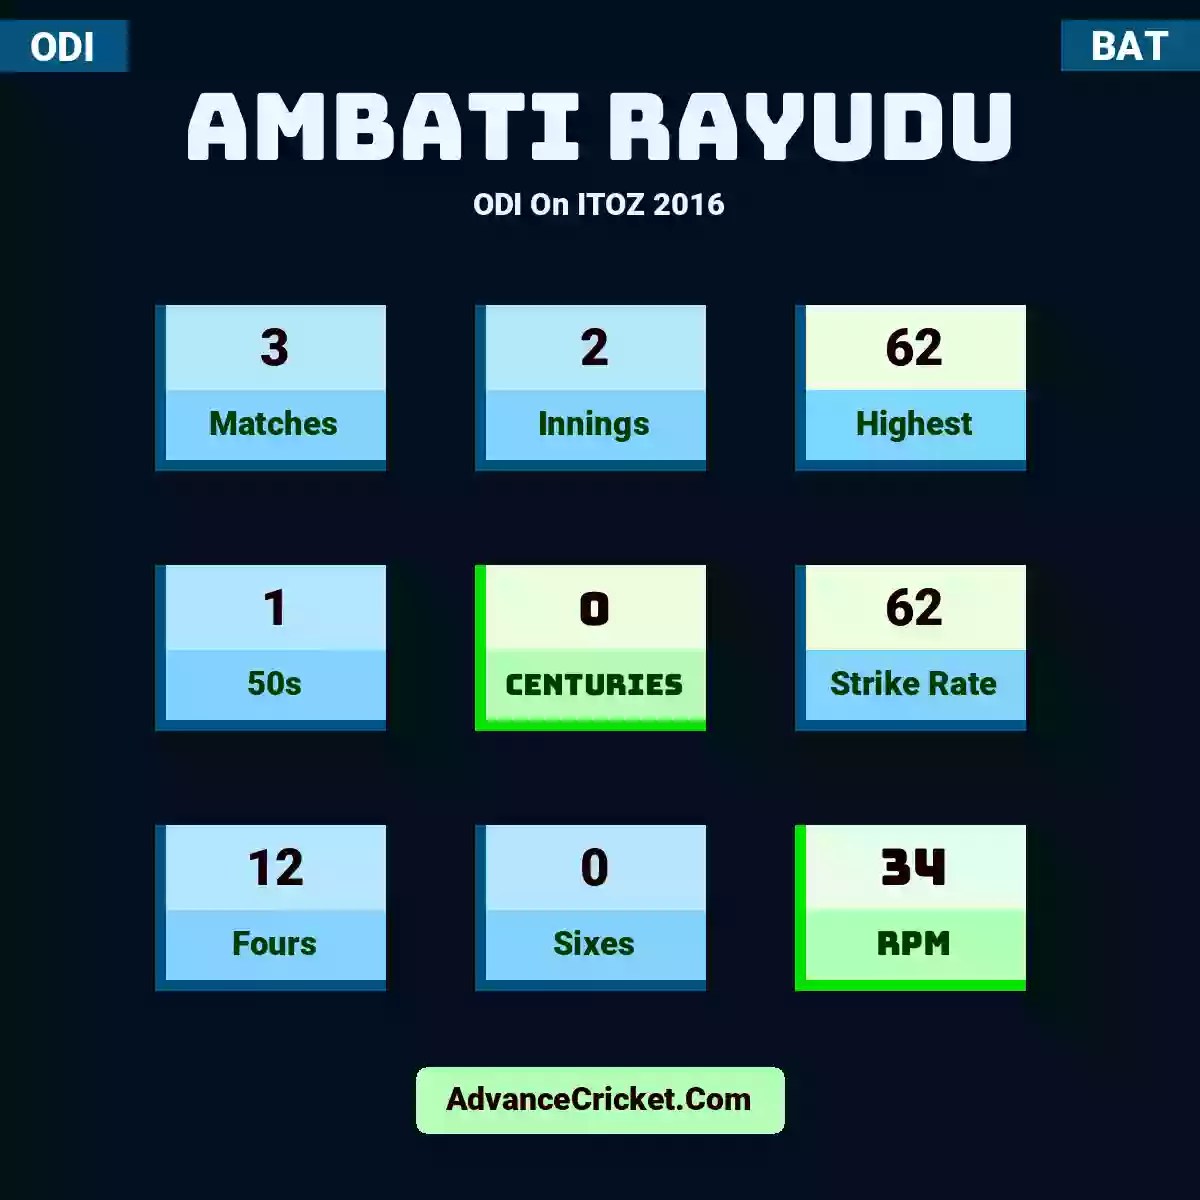 Ambati Rayudu ODI  On ITOZ 2016, Ambati Rayudu played 3 matches, scored 62 runs as highest, 1 half-centuries, and 0 centuries, with a strike rate of 62. A.Rayudu hit 12 fours and 0 sixes, with an RPM of 34.